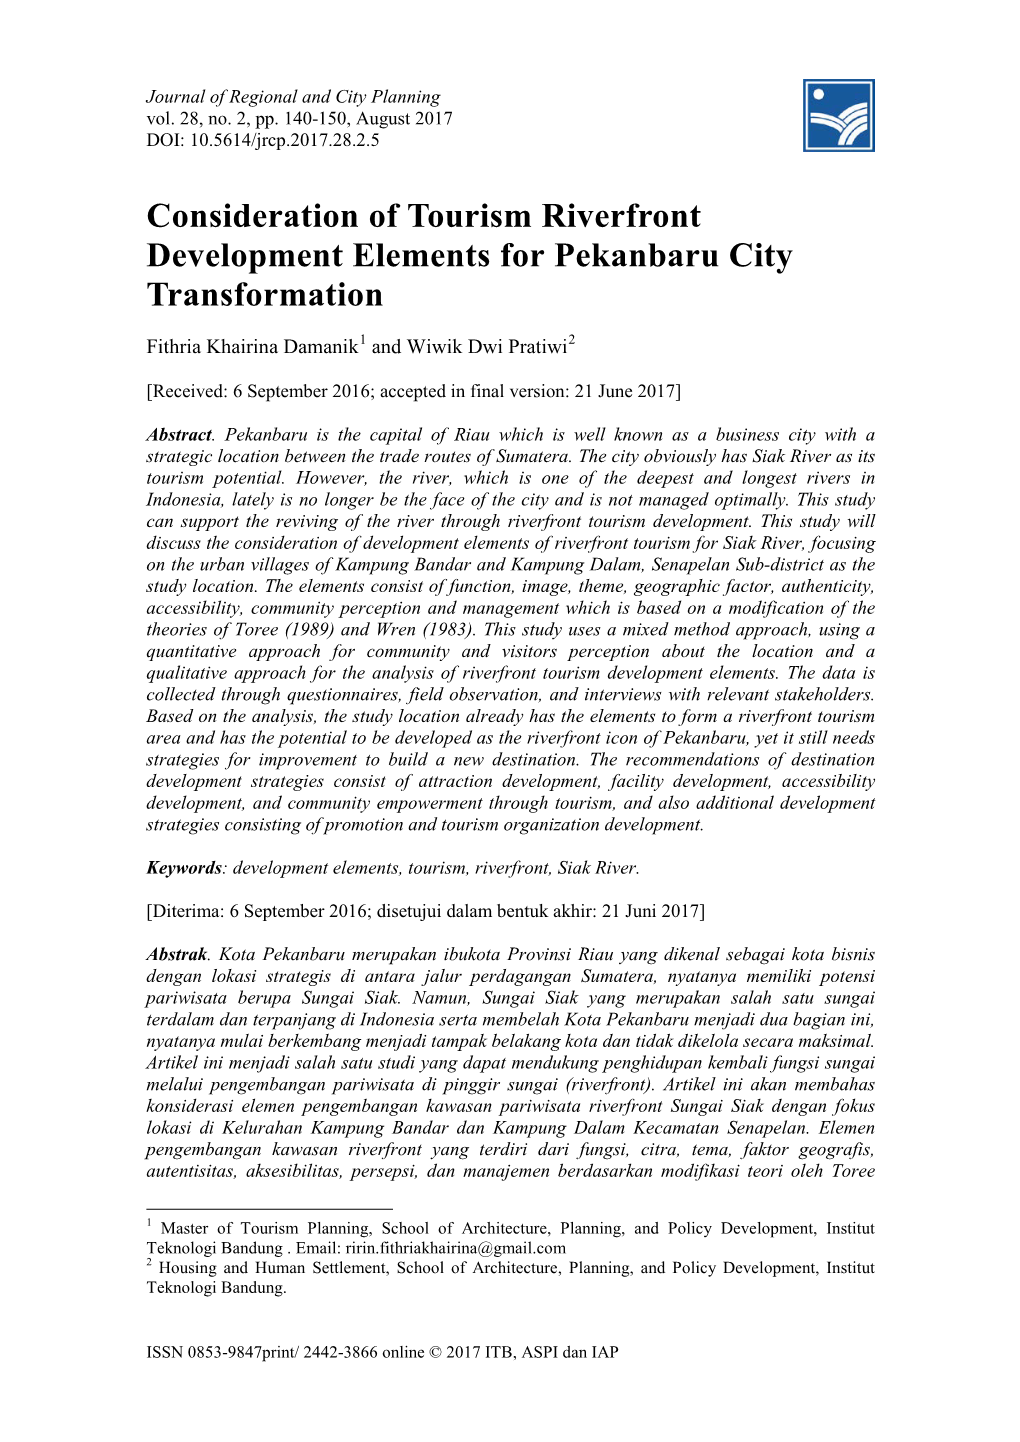 Consideration of Tourism Riverfront Development Elements for Pekanbaru City Transformation